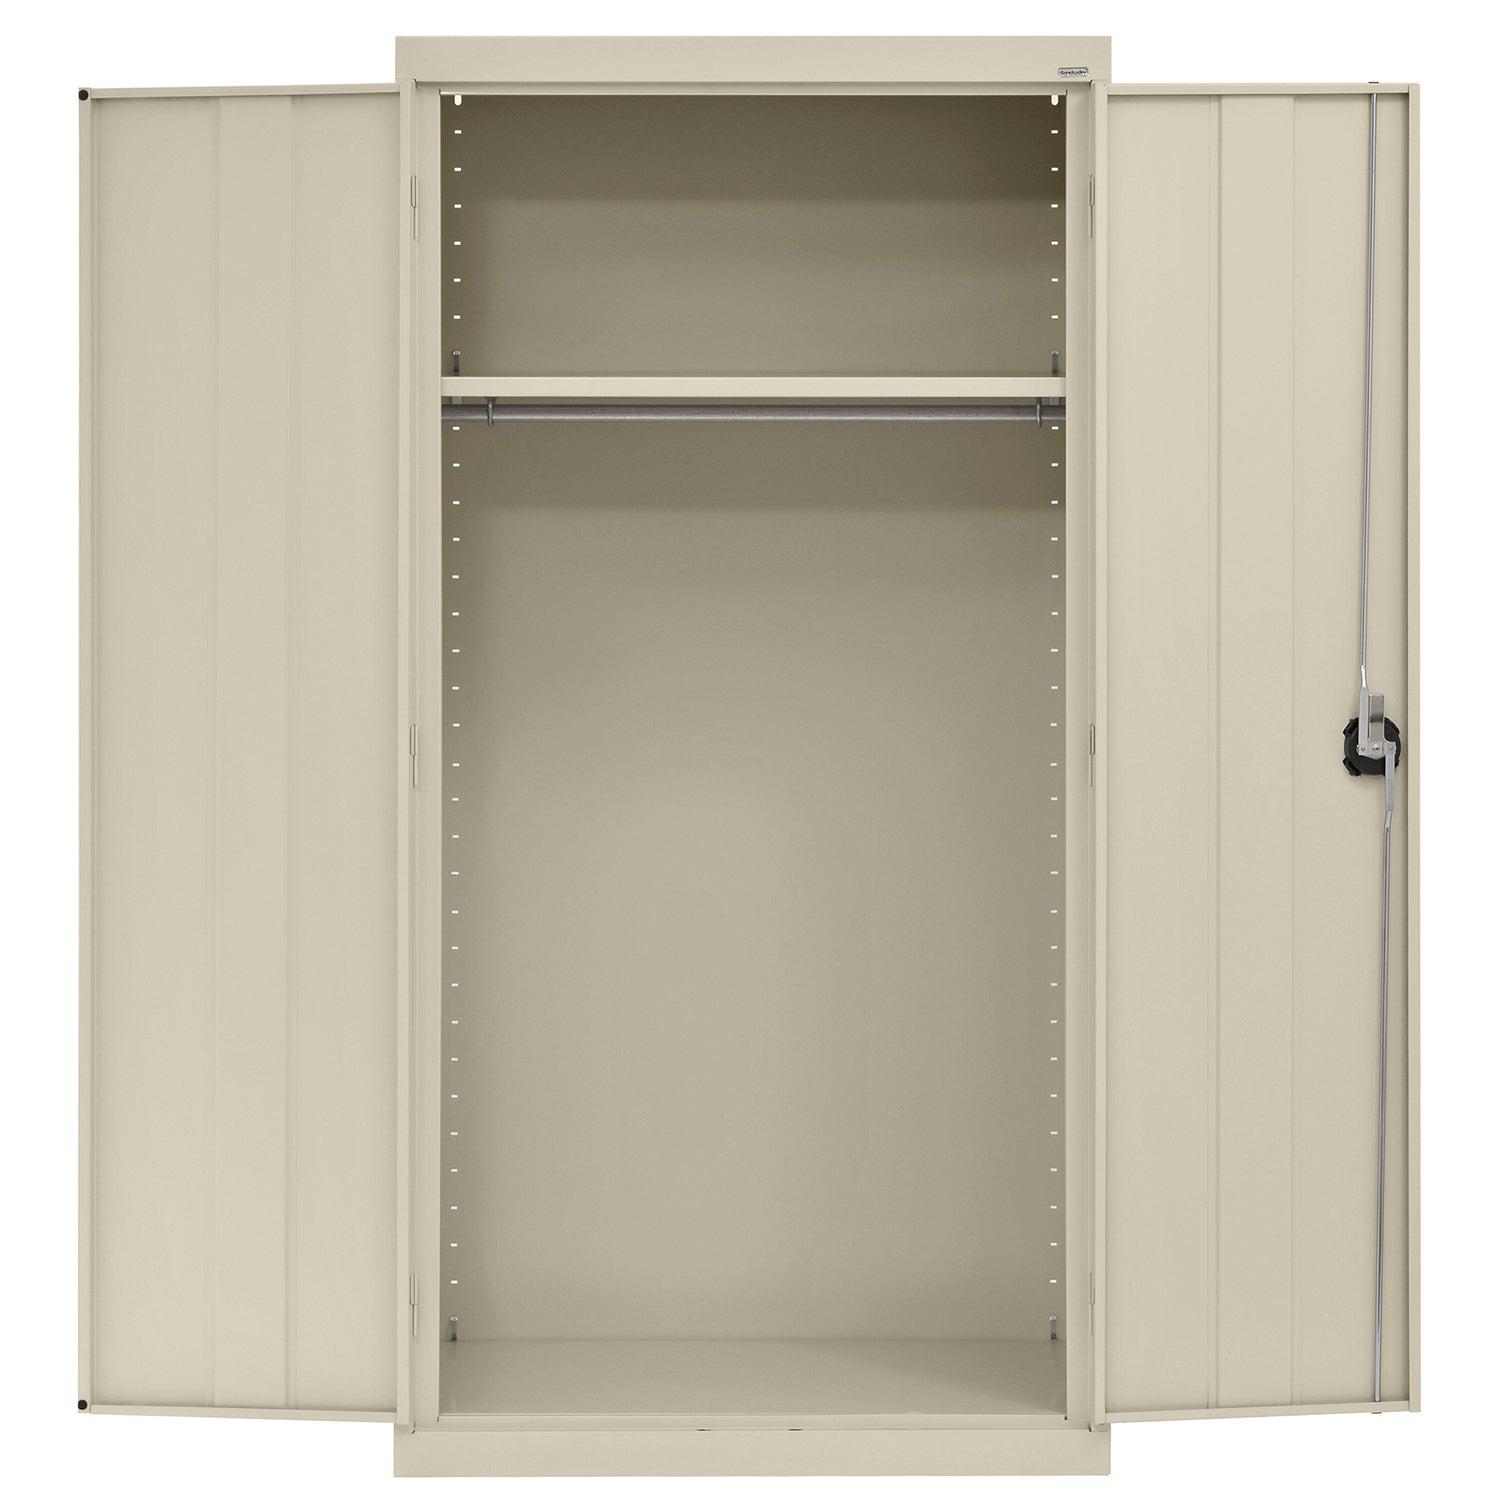 Elite Series Wardrobe Cabinet, 36" W x 24" D x 72" H